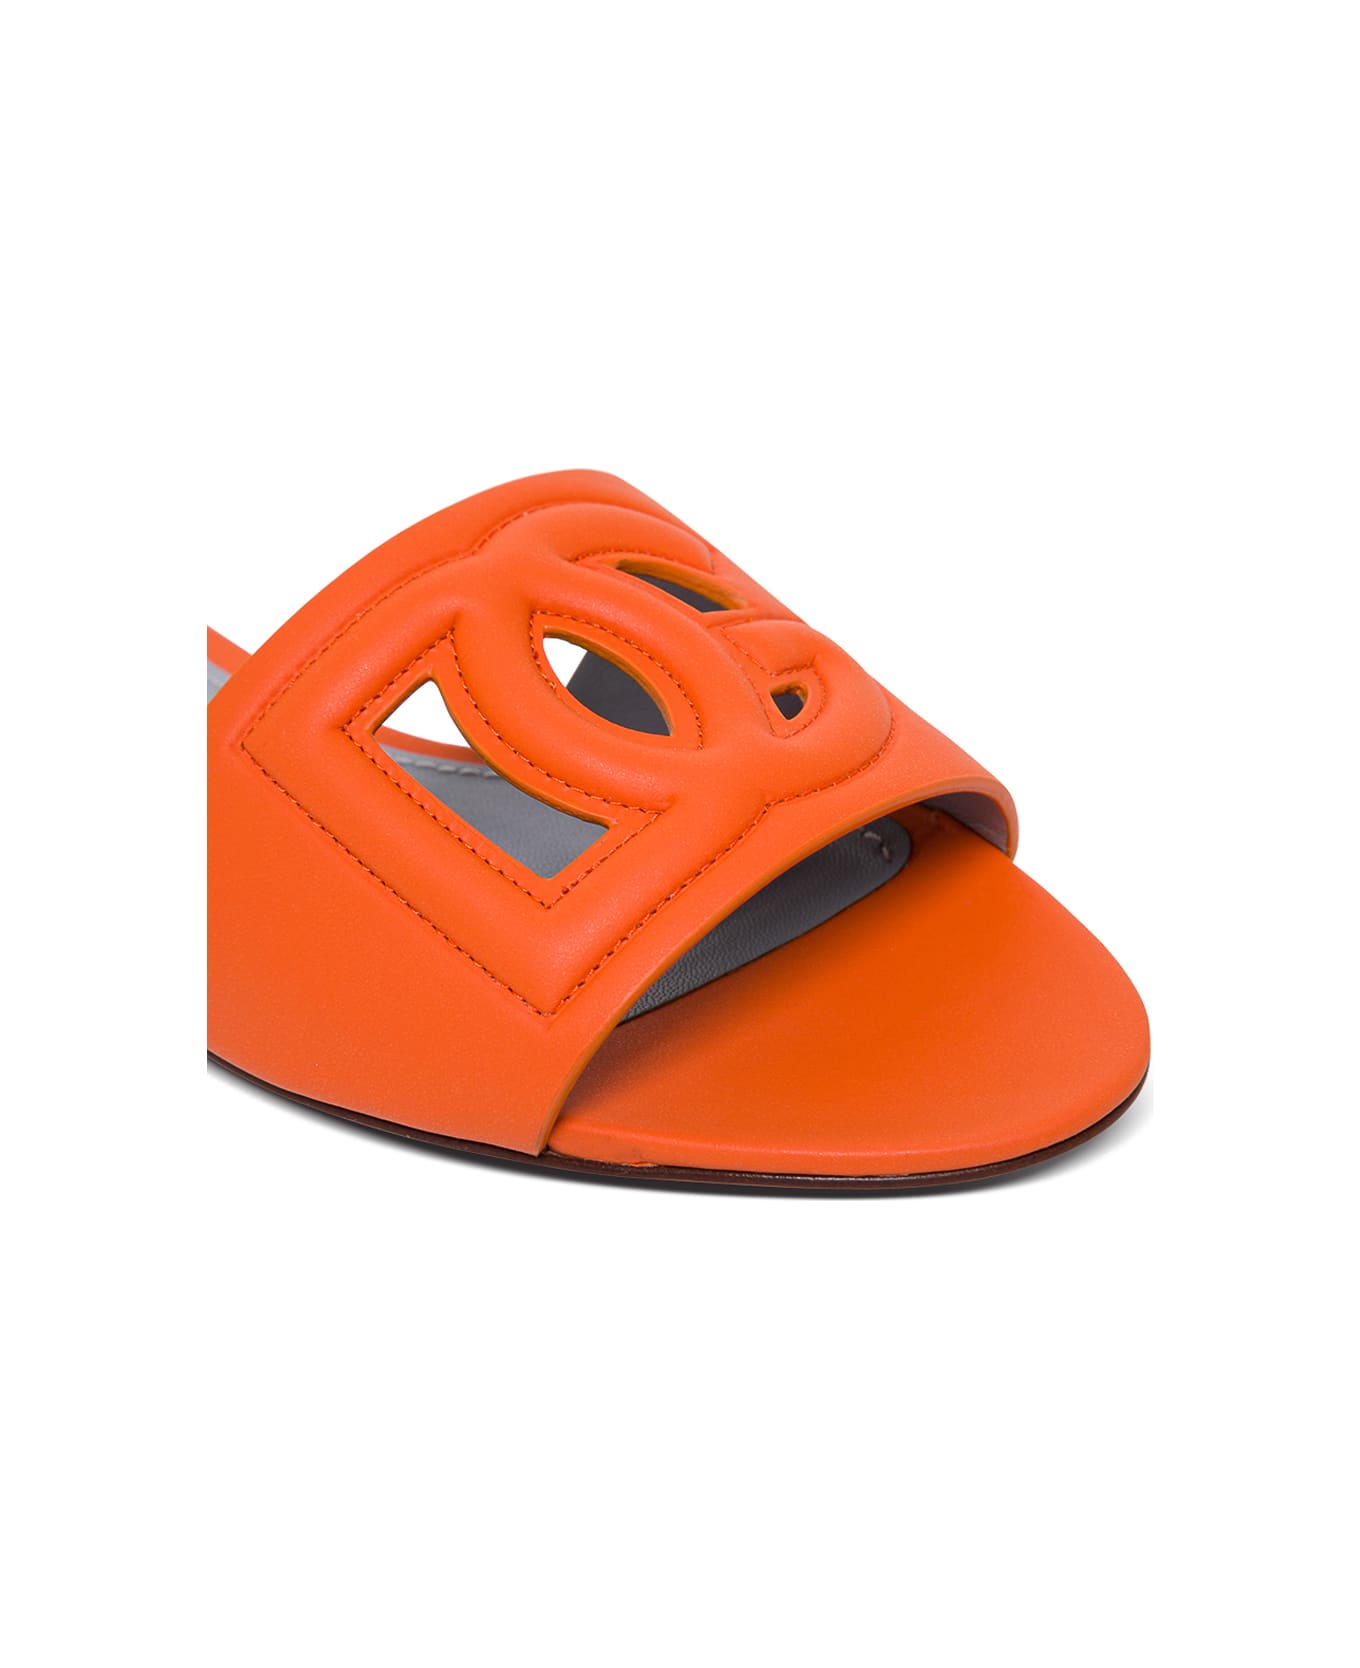 Dolce & Gabbana Slide Sandals In Orange Leather With Logo - Orange